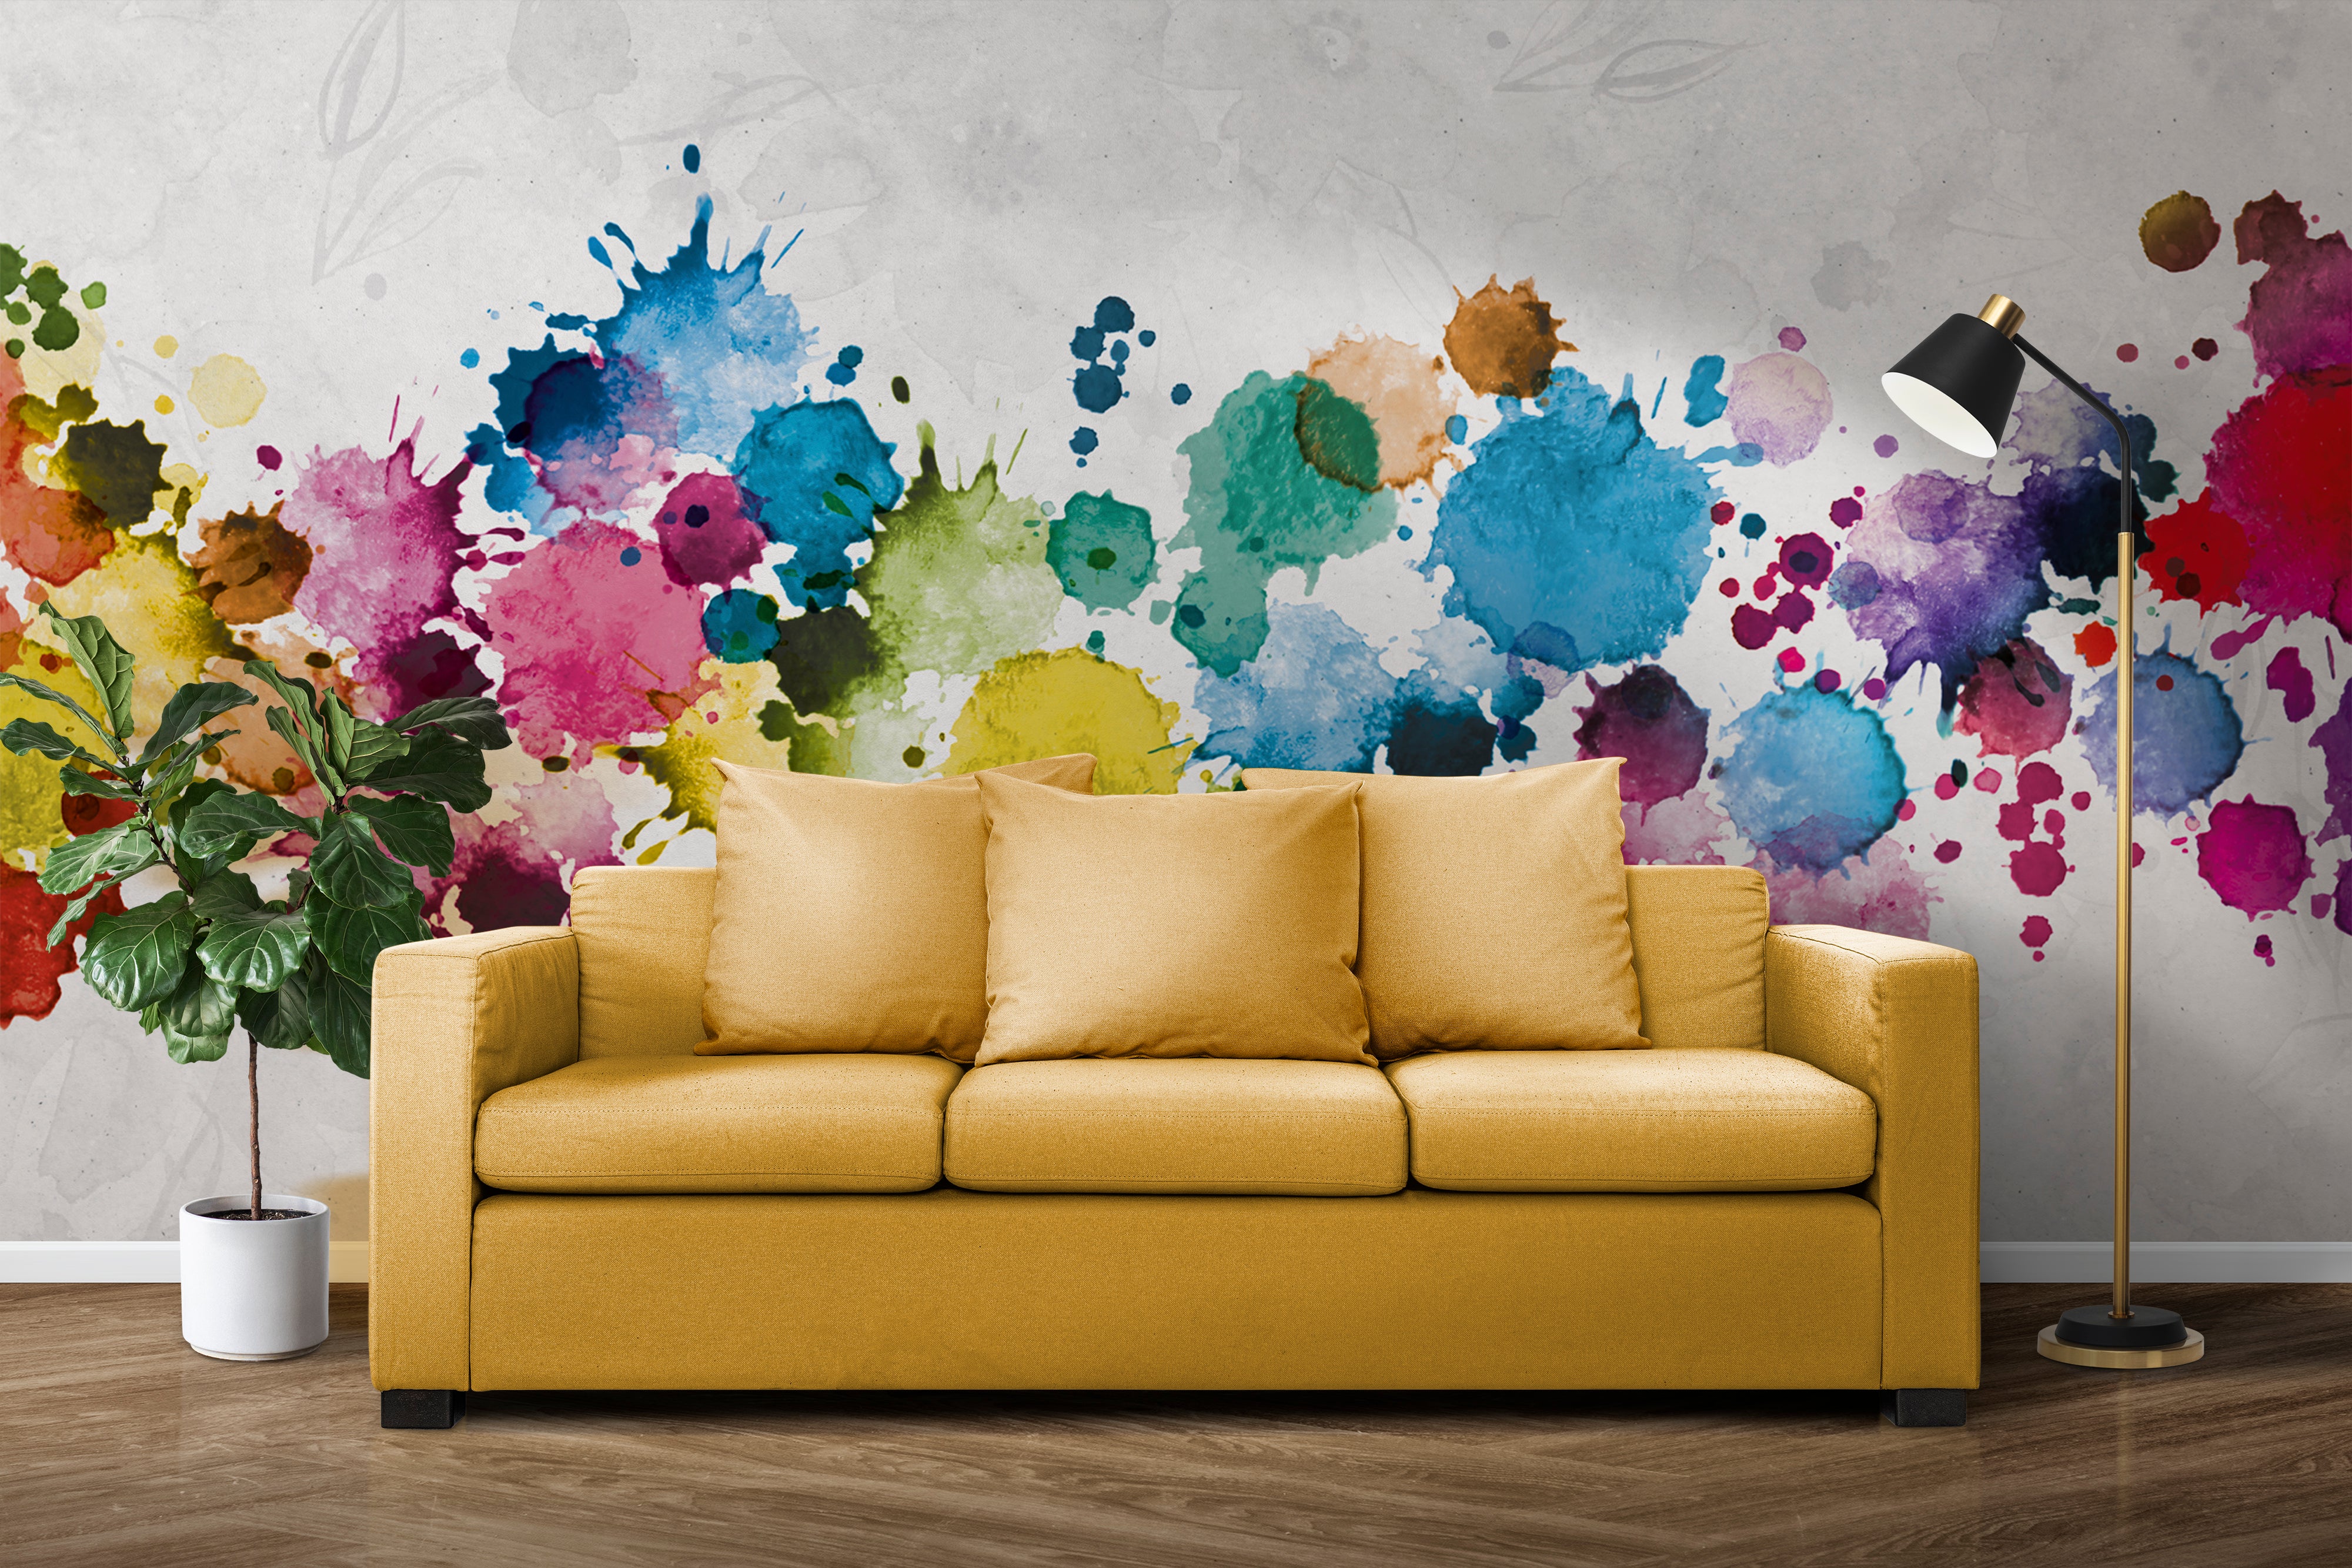 Paint it Wallpaper Mural: Enhance Your Space